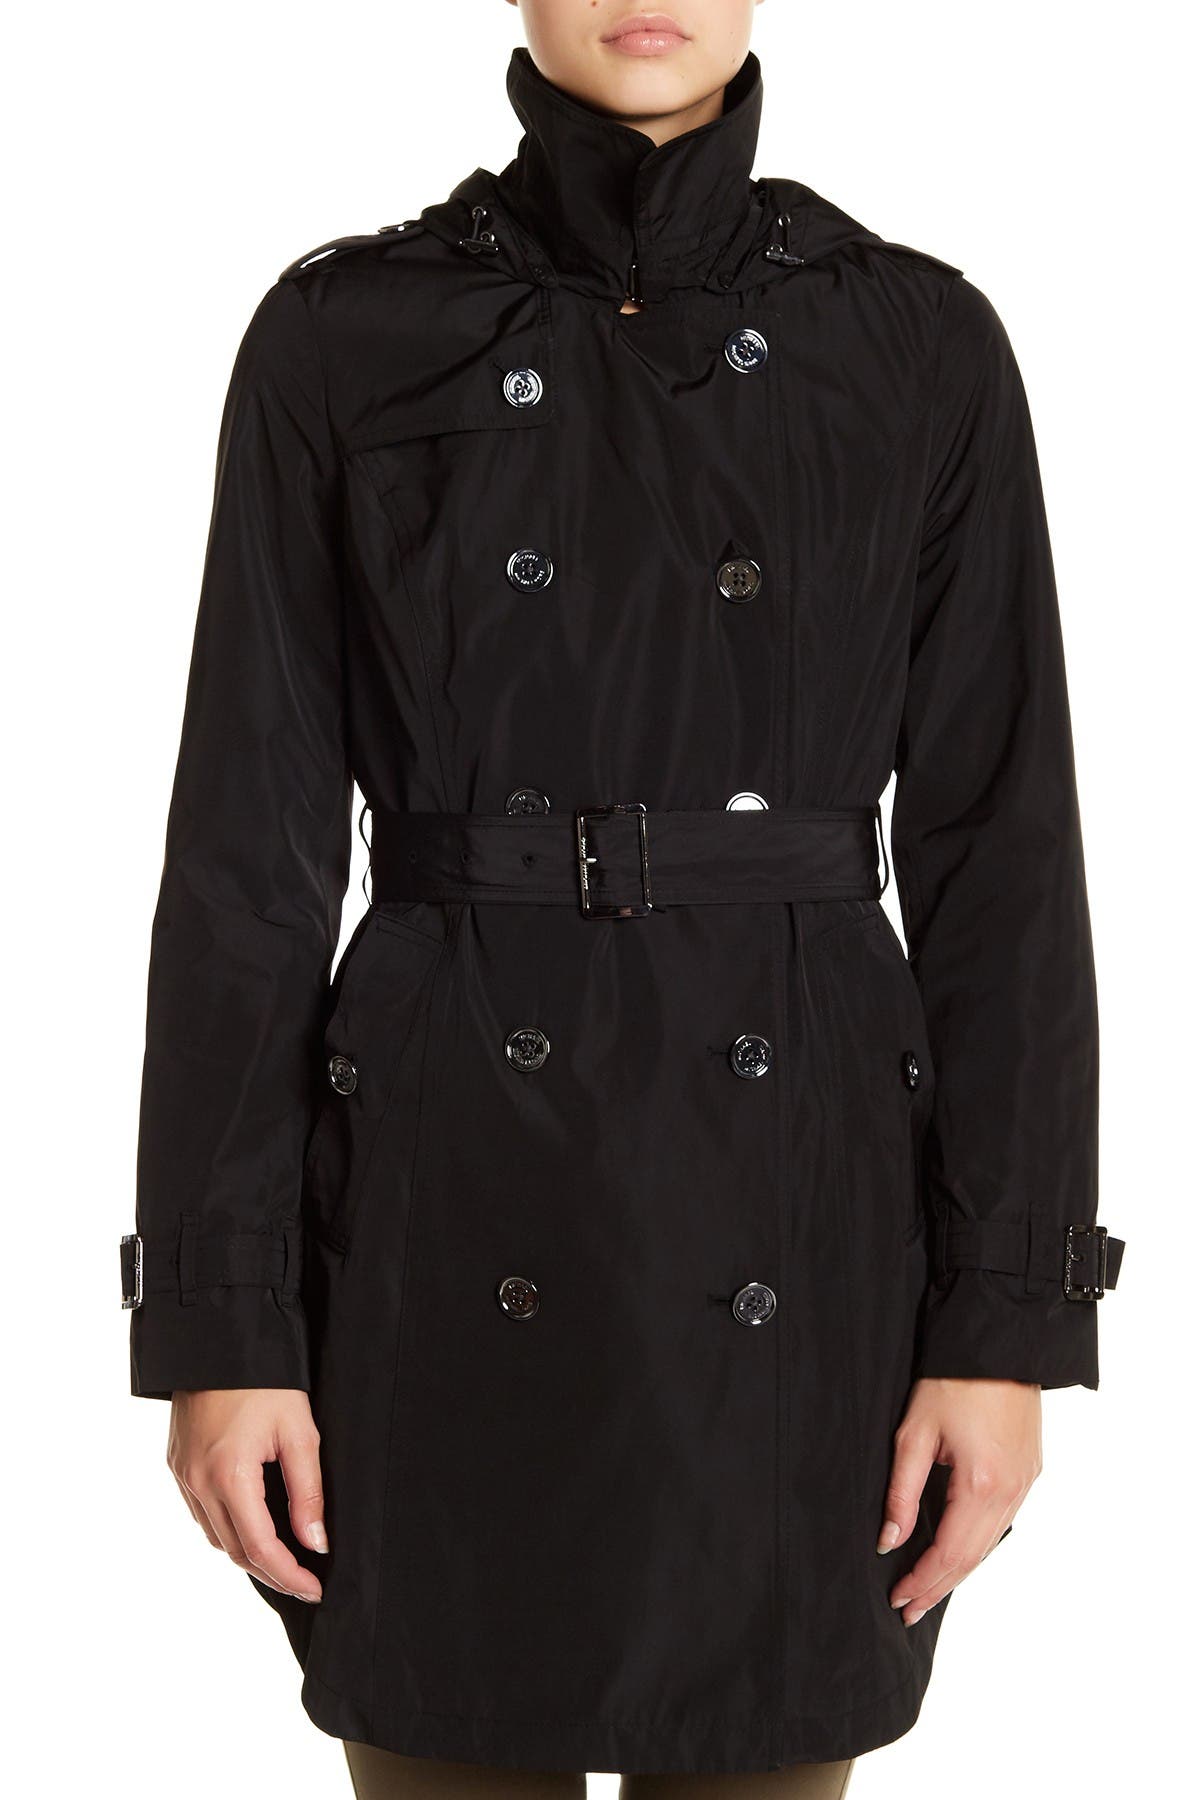 michael kors black trench coat with hood